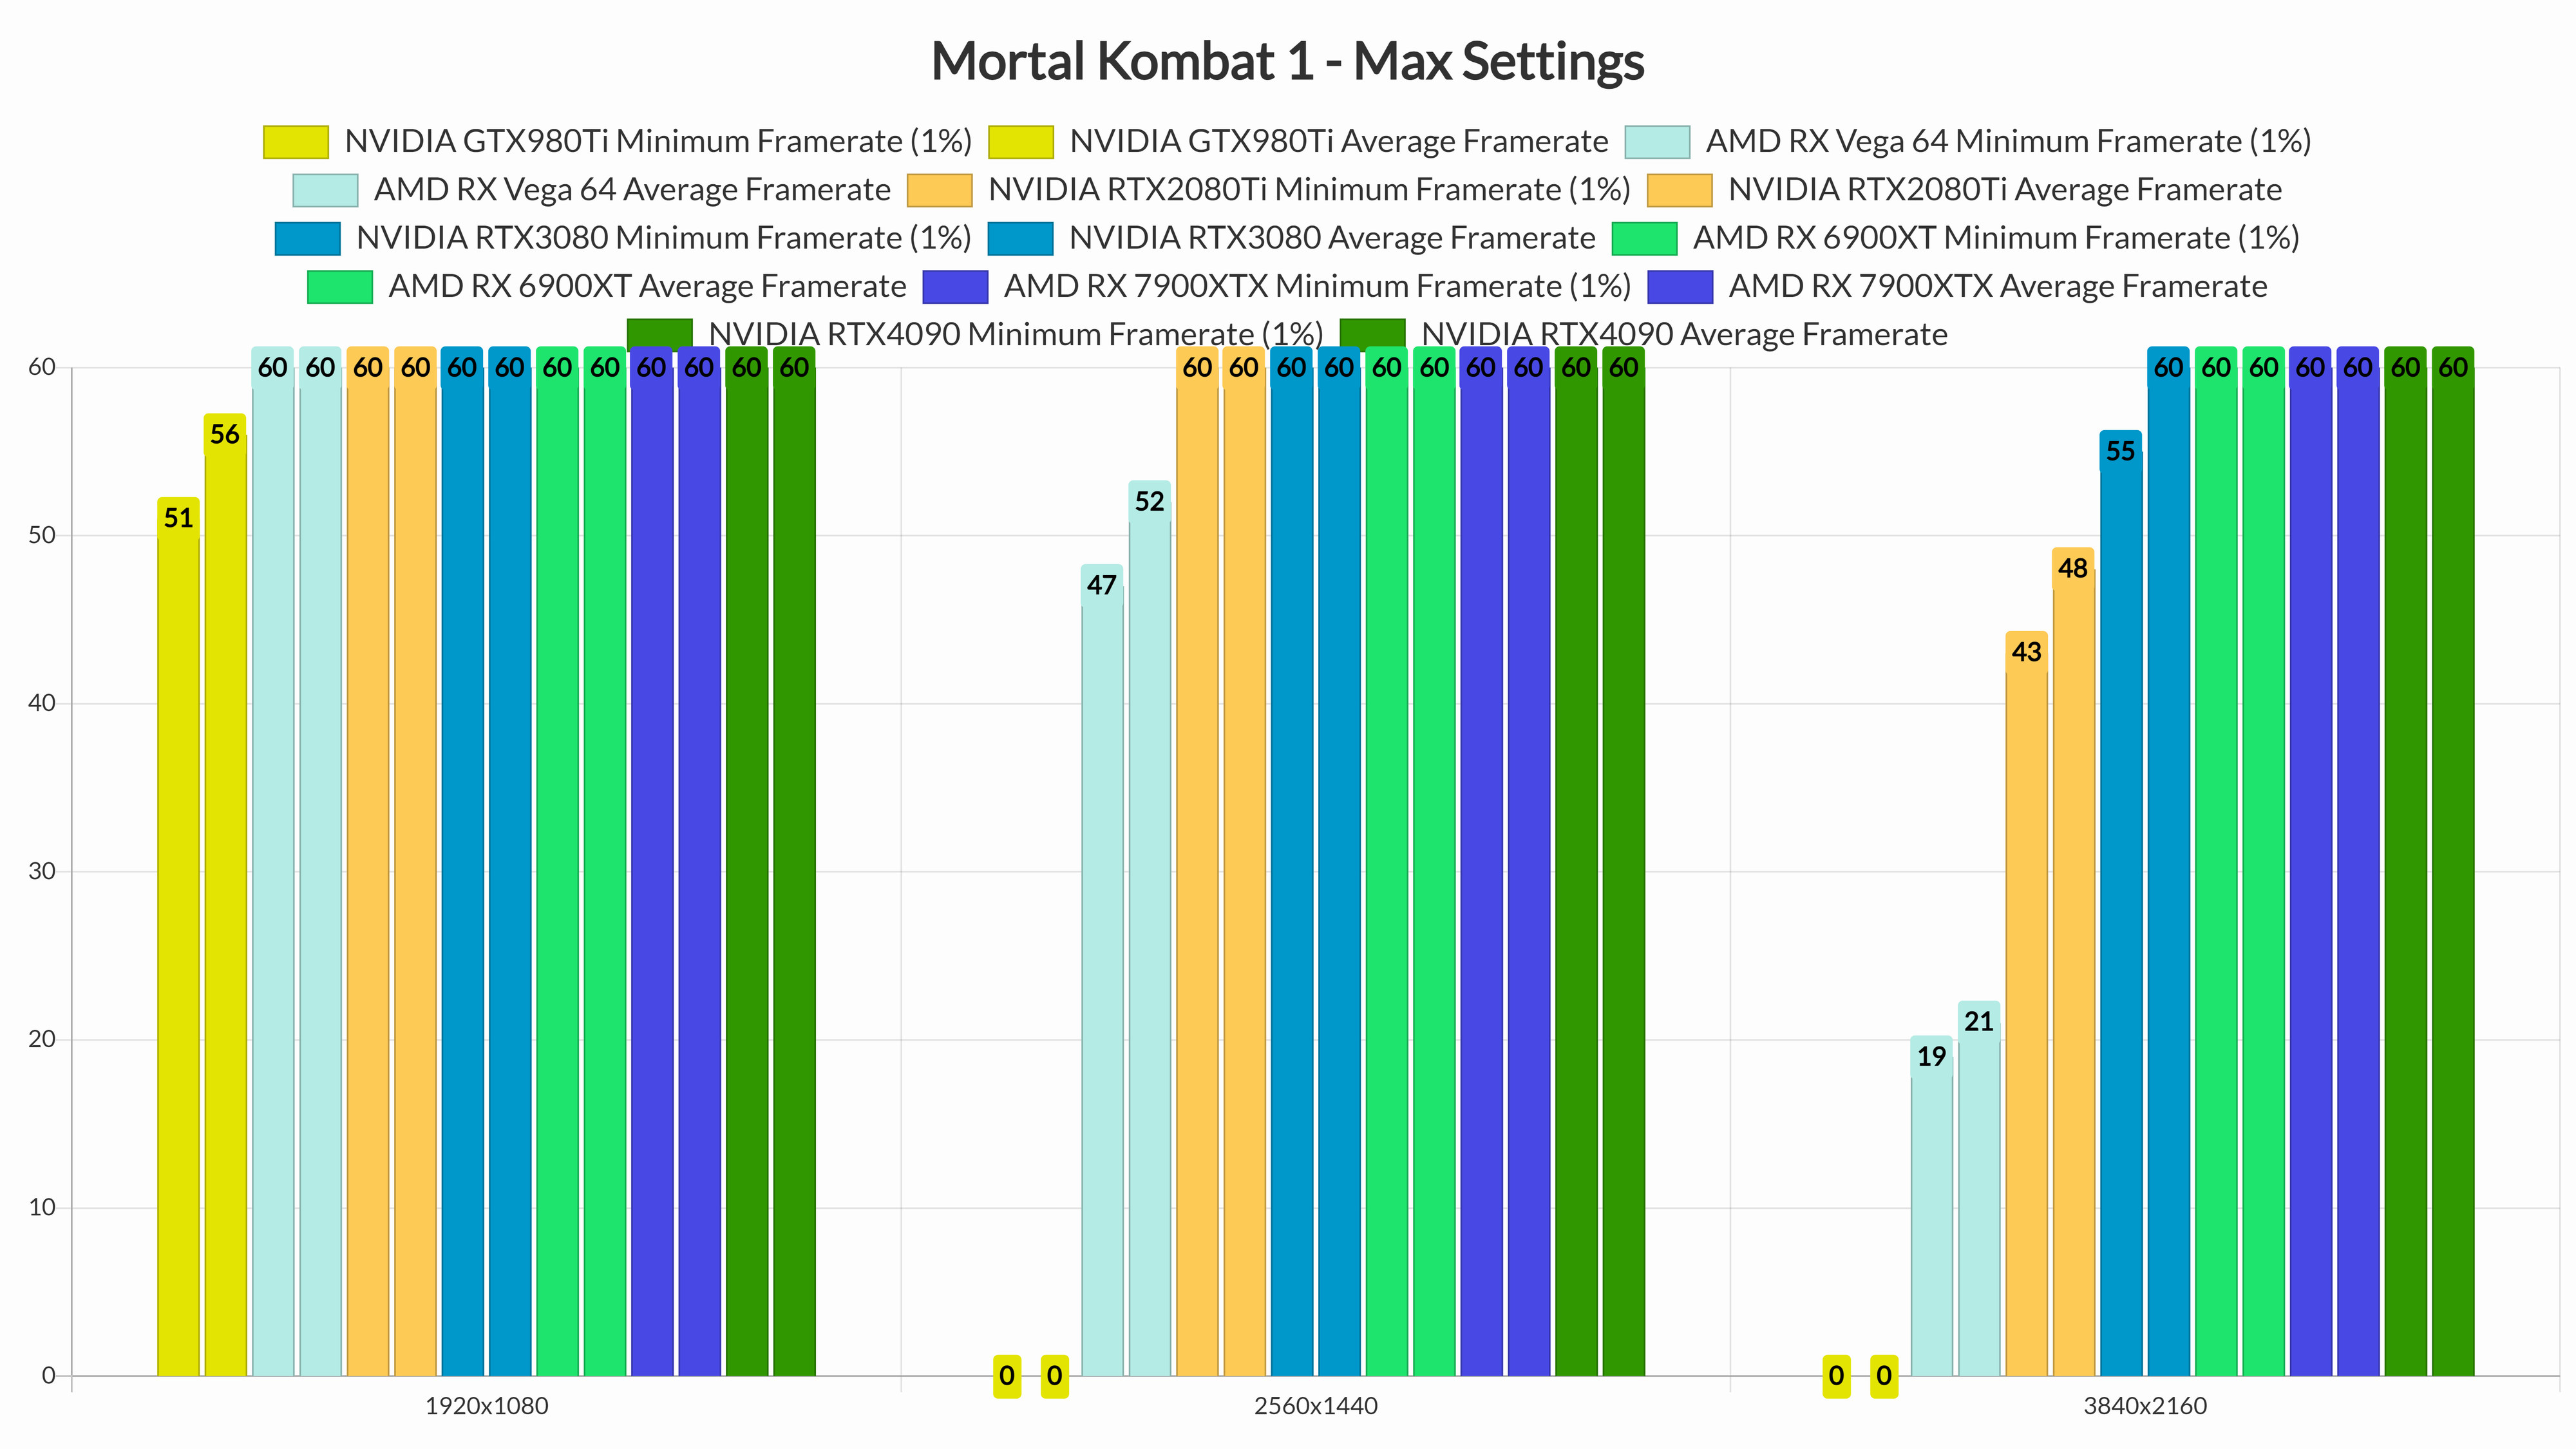 Best Mortal Kombat 1 settings for PS5